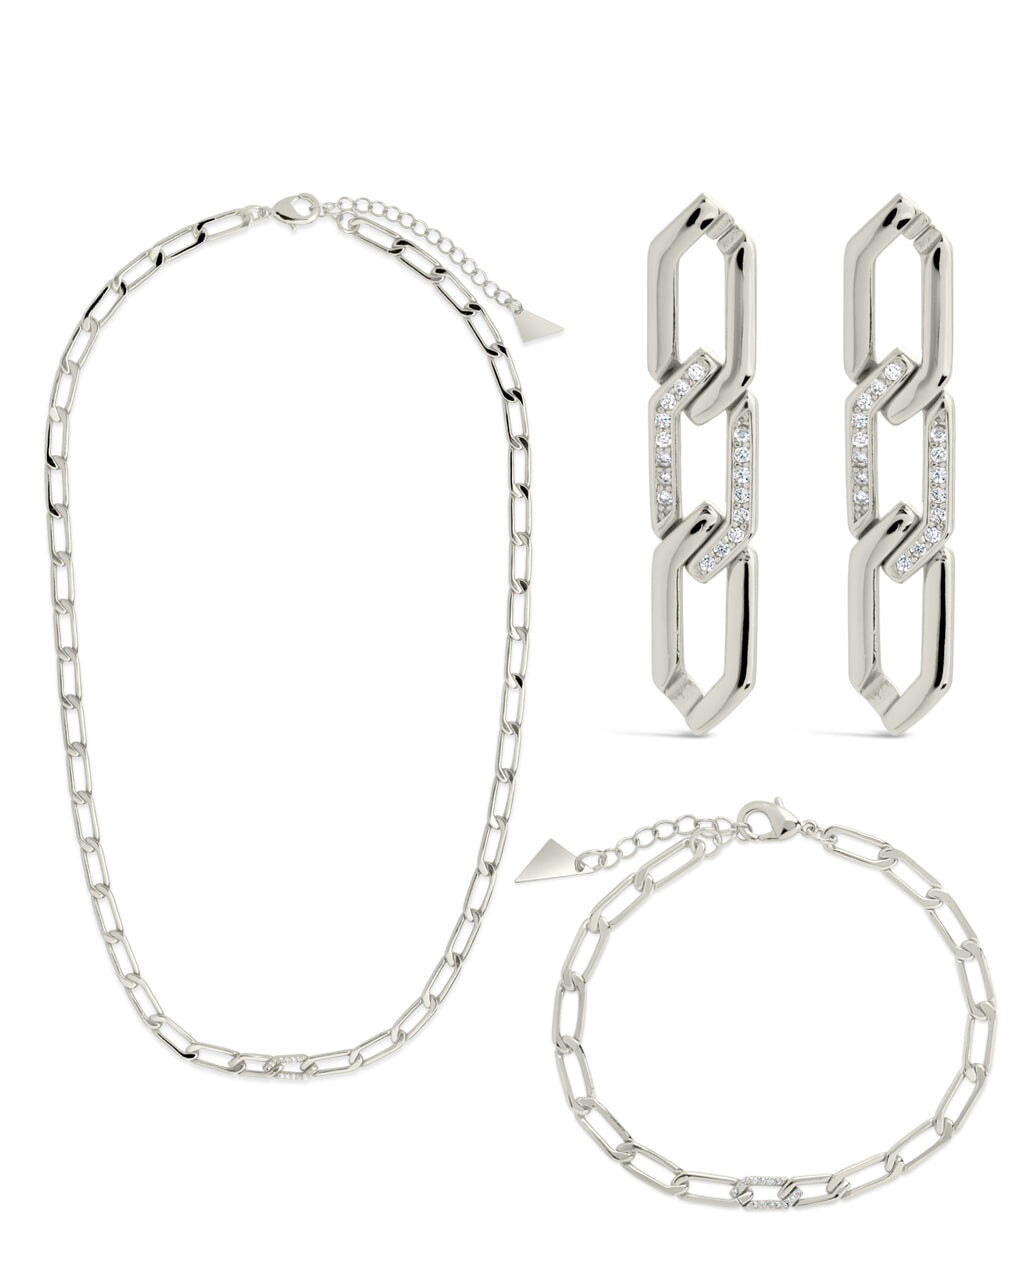 Kinslee CZ Chain Link Matching Set Bundles Sterling Forever Silver 